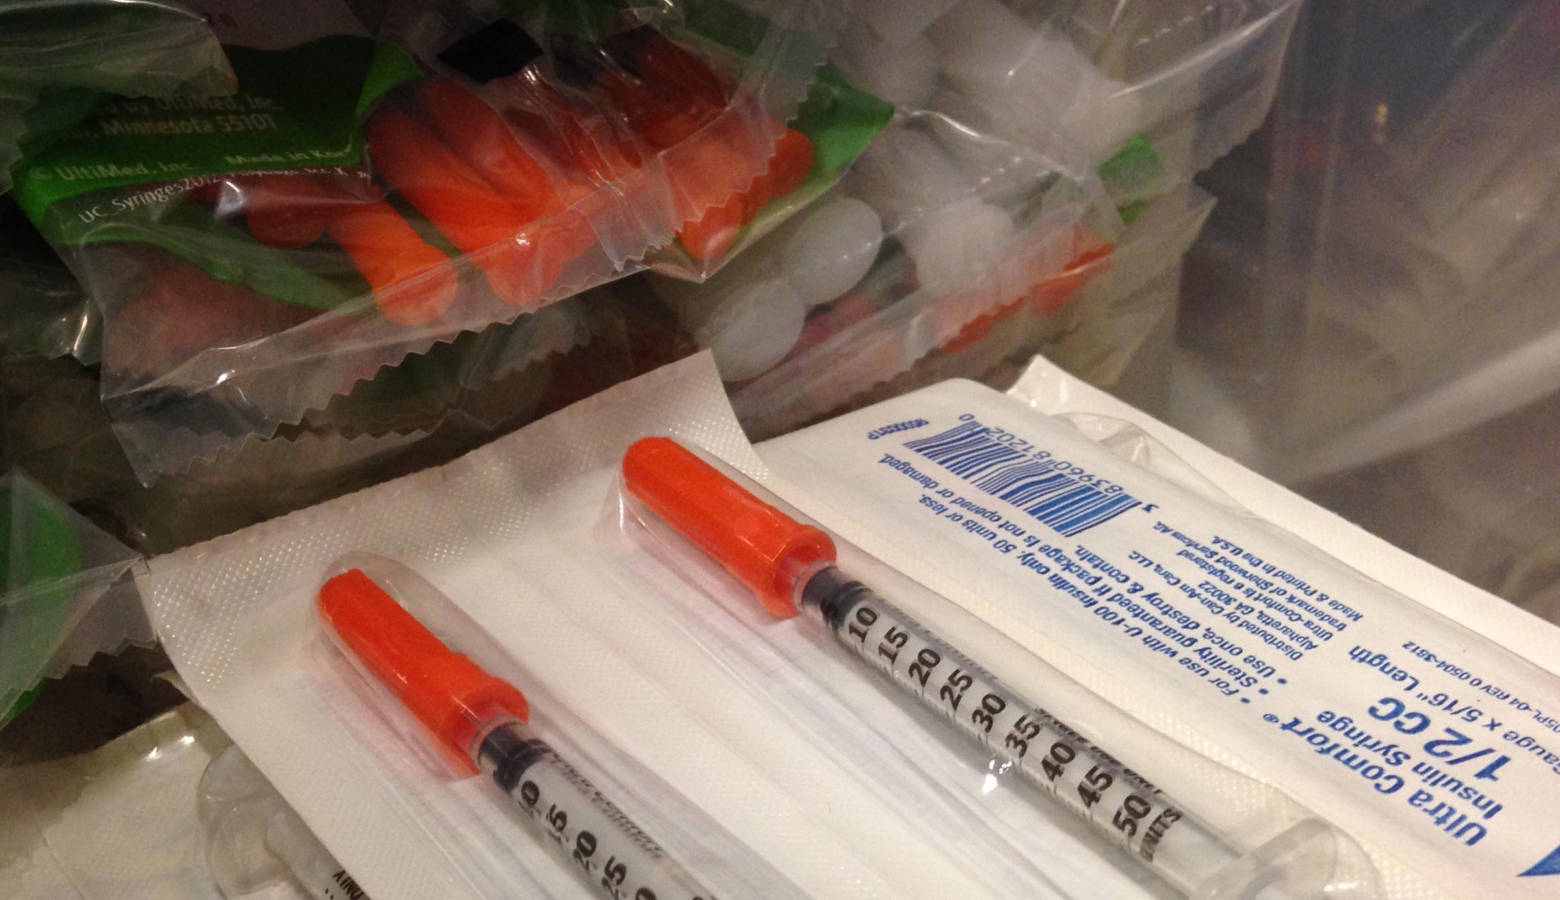 Clean syringes at a needle exchange. (Jake Harper/Side Effects)